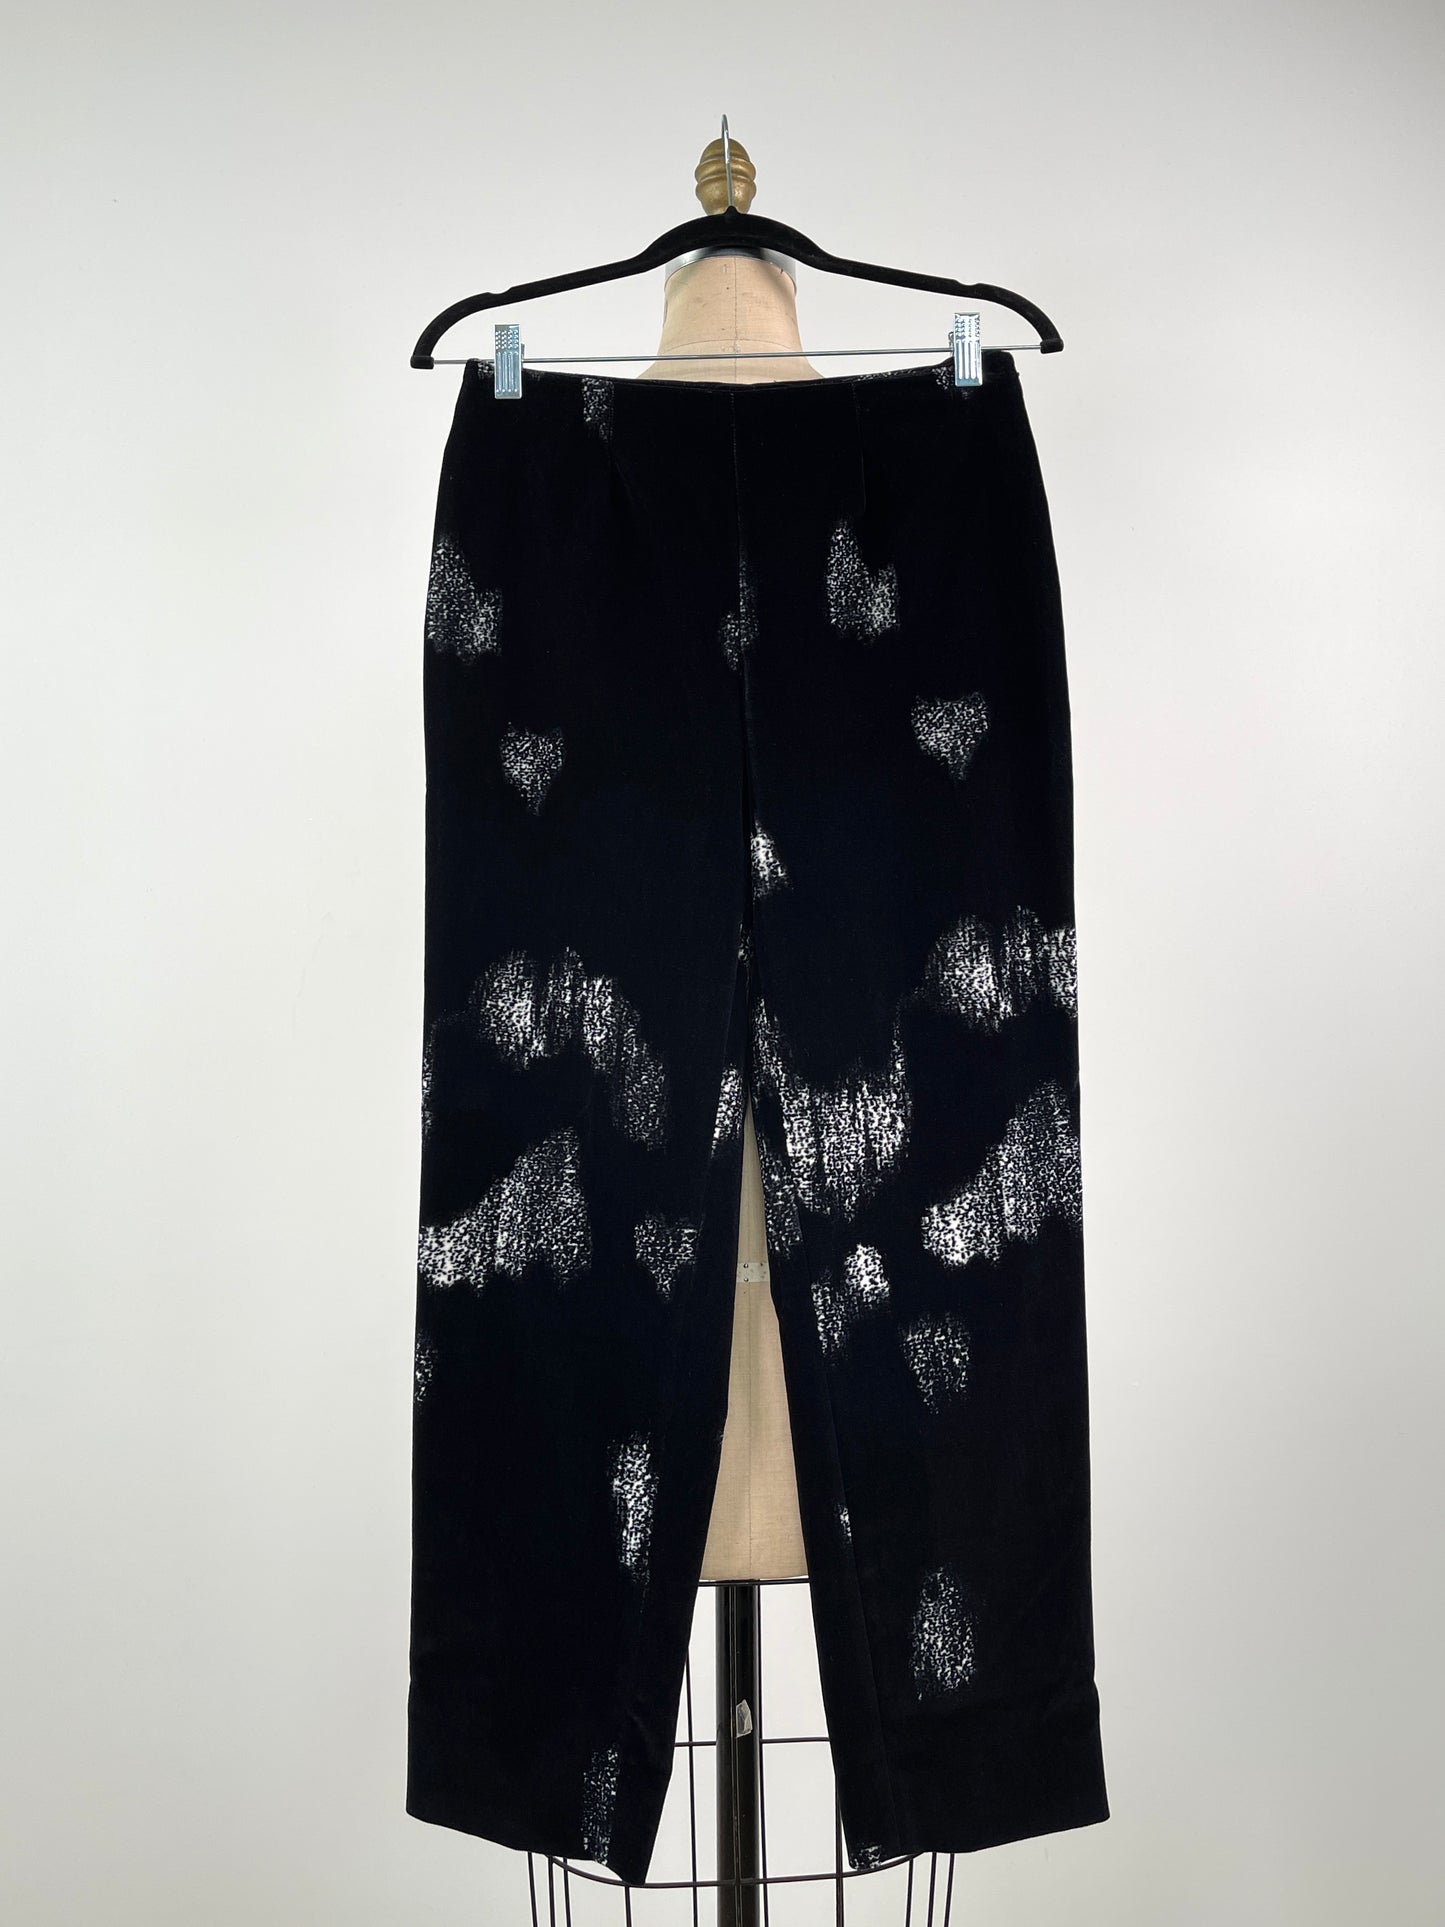 Pantalon velours noir à motif abstrait blanc (XS)